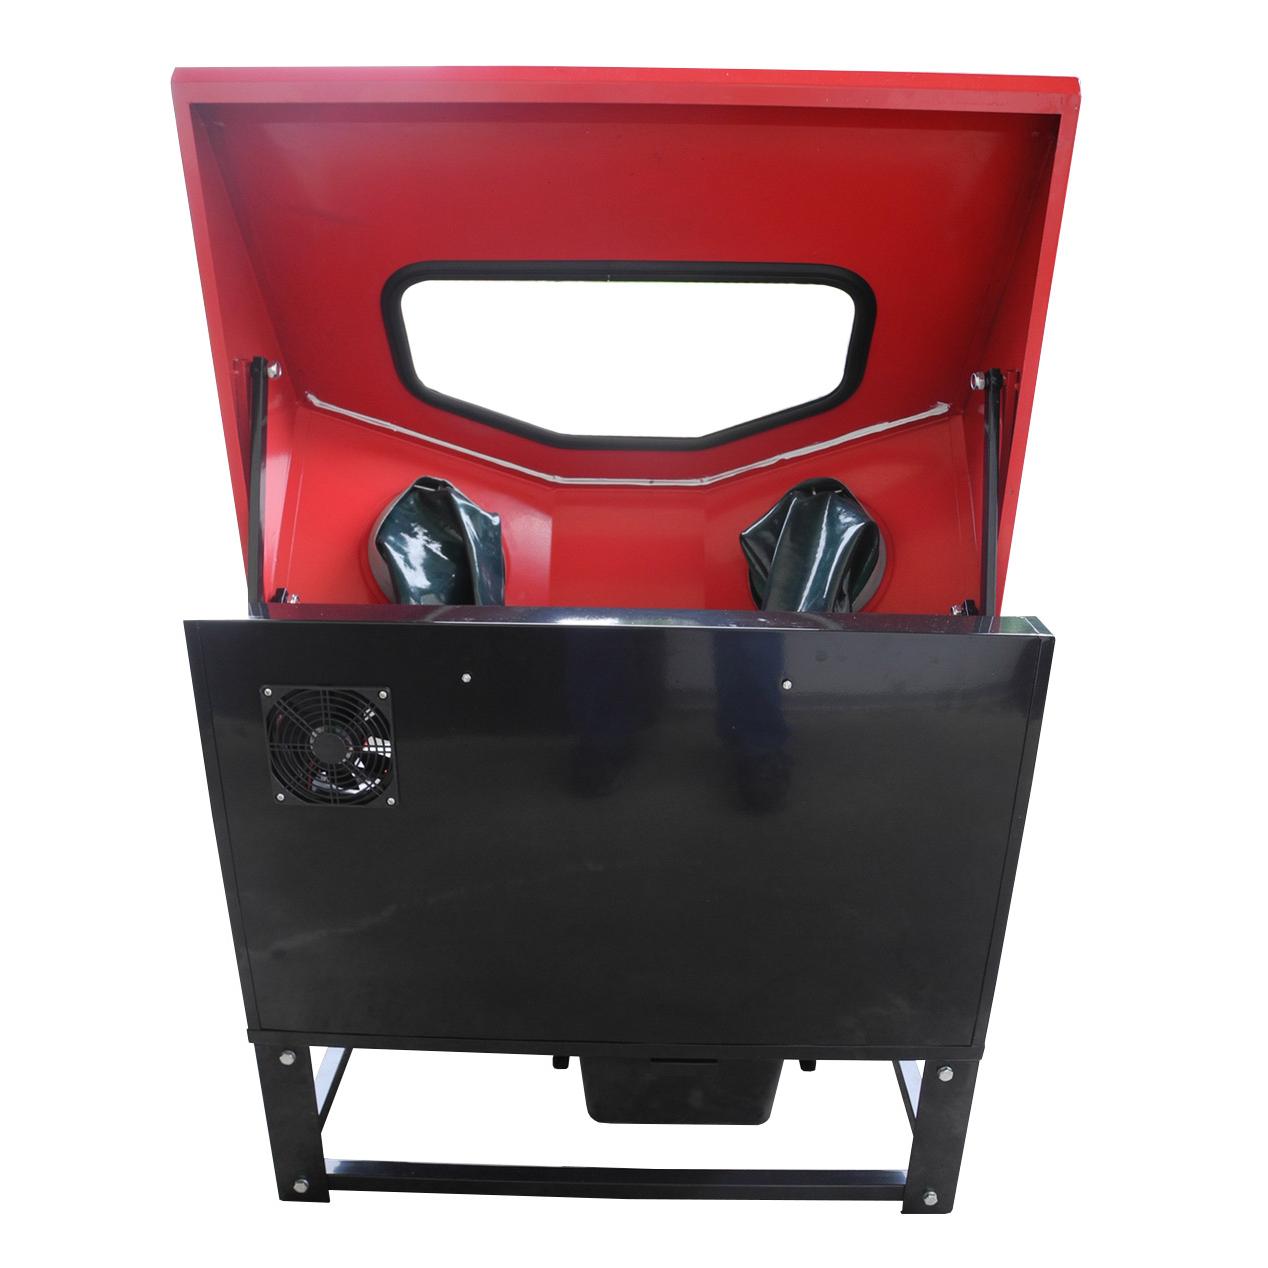 Buy Redline 3-Gallon Heater Parts Washer for Sale Online